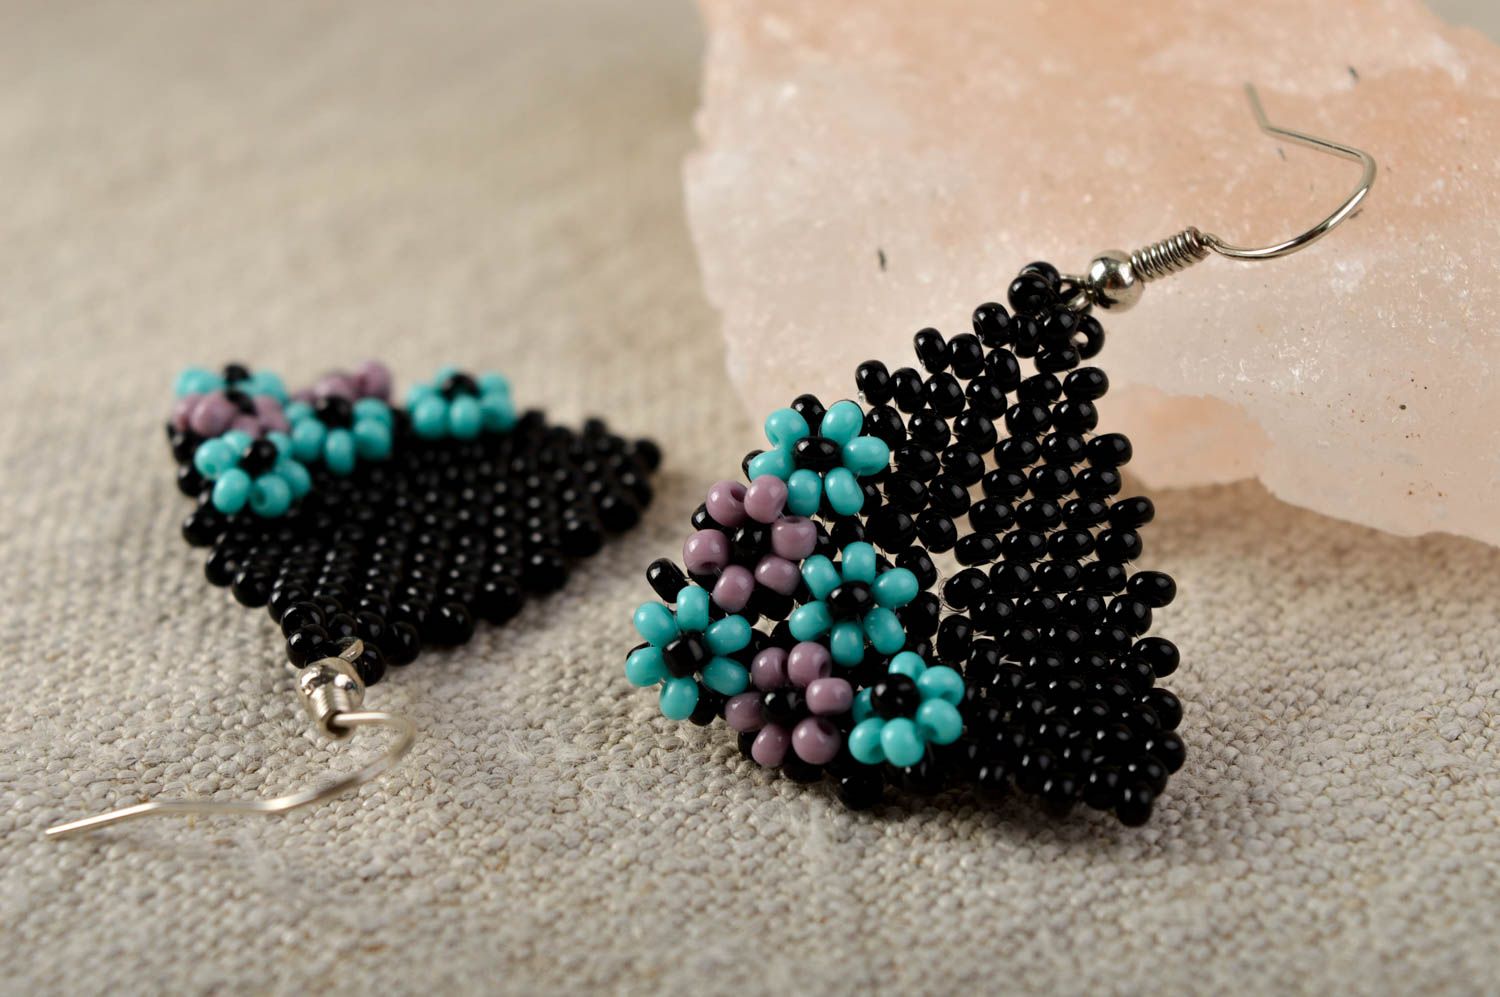 Unusual handmade beaded earrings fashion tips costume jewelry designs gift ideas photo 1